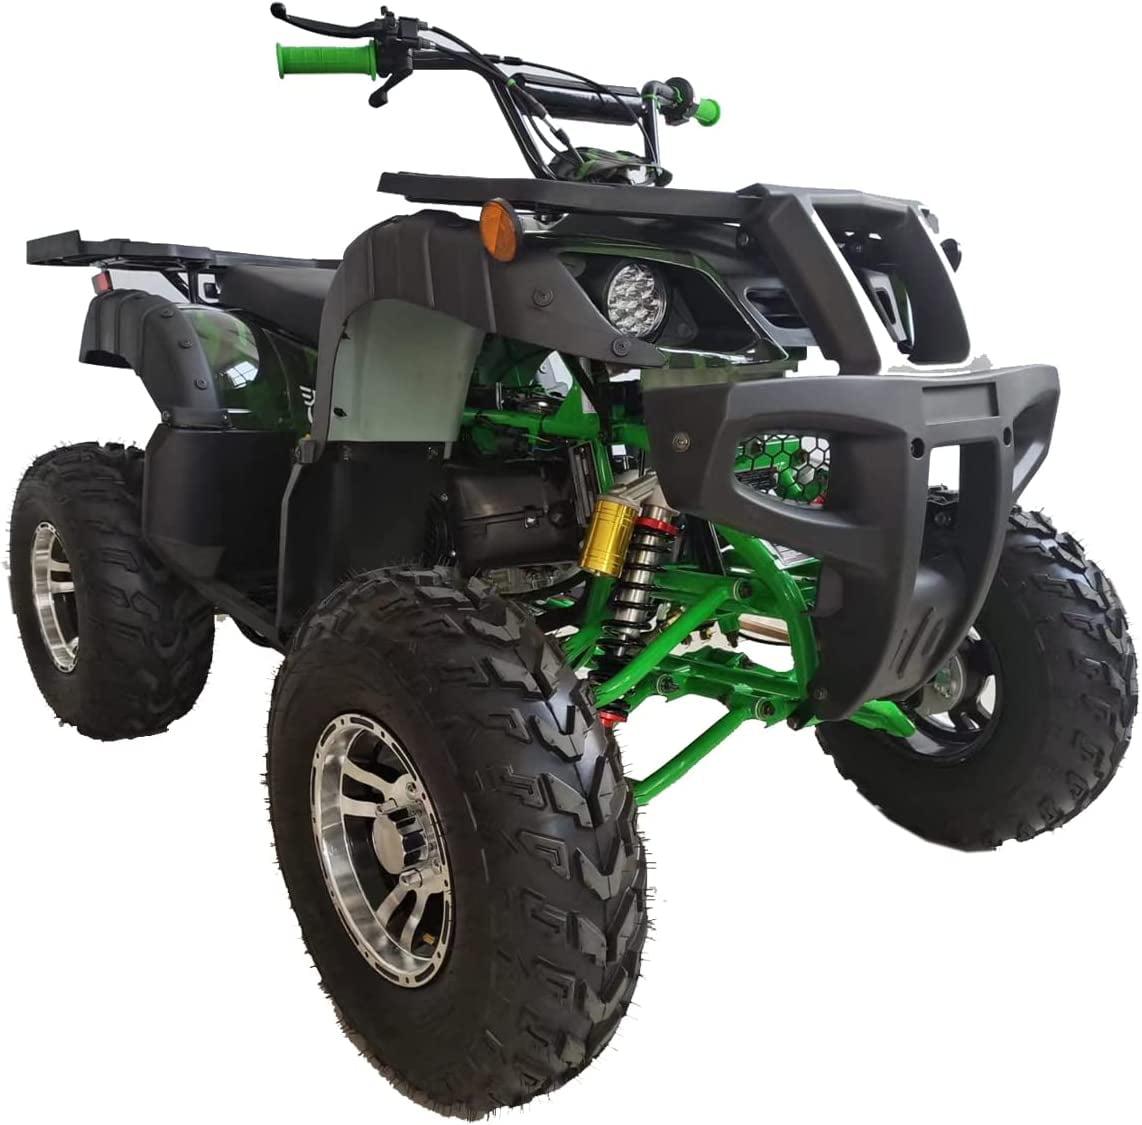 MINI-ATV PROFIVE RAPTOR 50 CC ROT